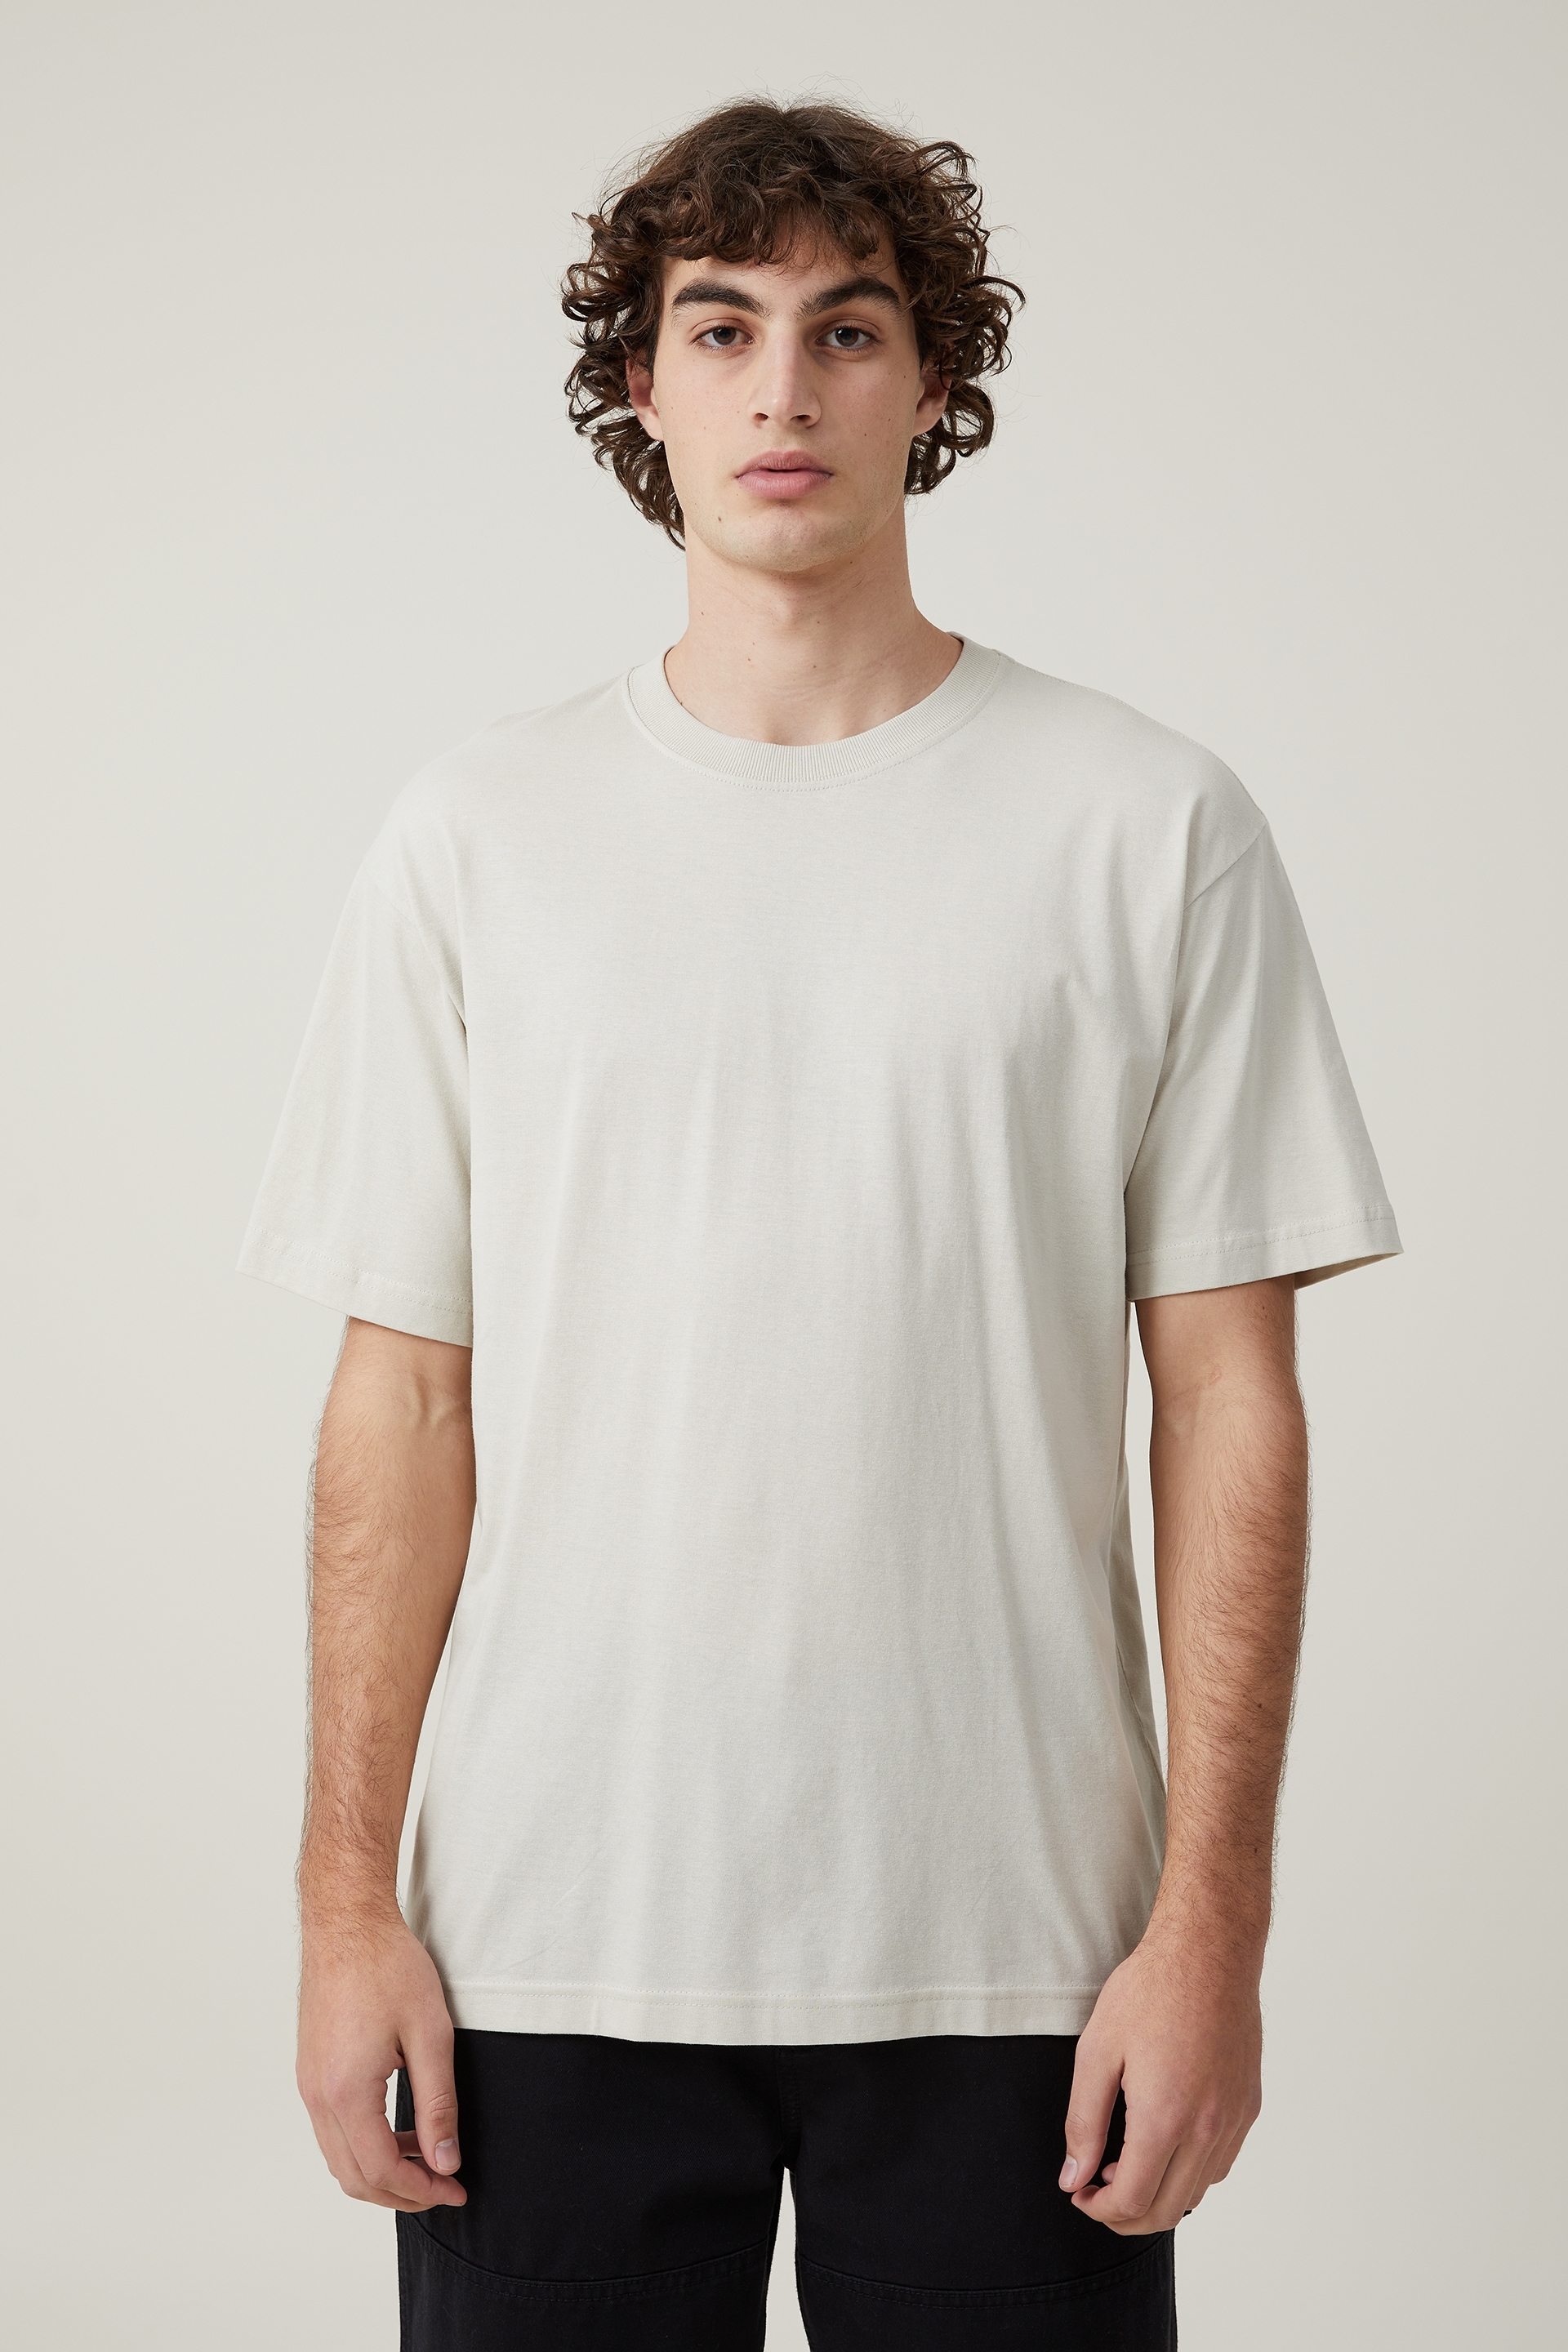 Cotton On Men - Organic Loose Fit T-Shirt - Ivory